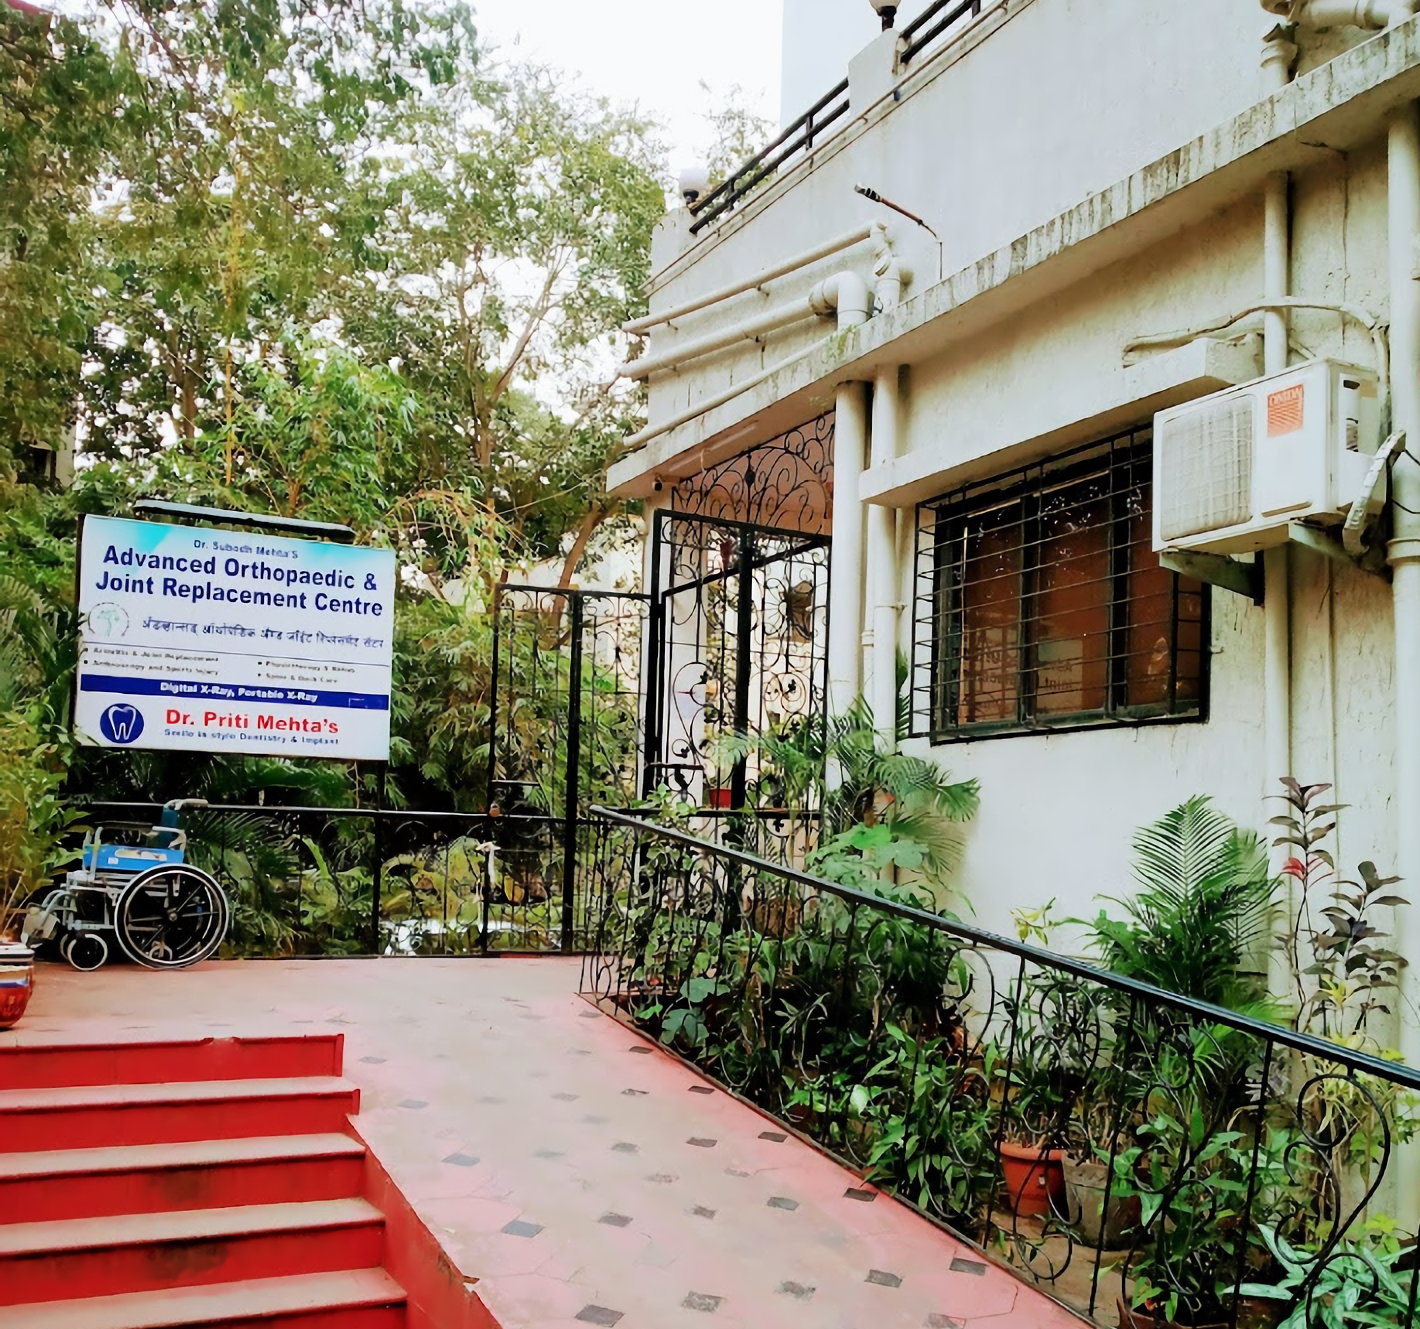 Dr. Subodh Mehta's Advanced Orthopaedic Centre